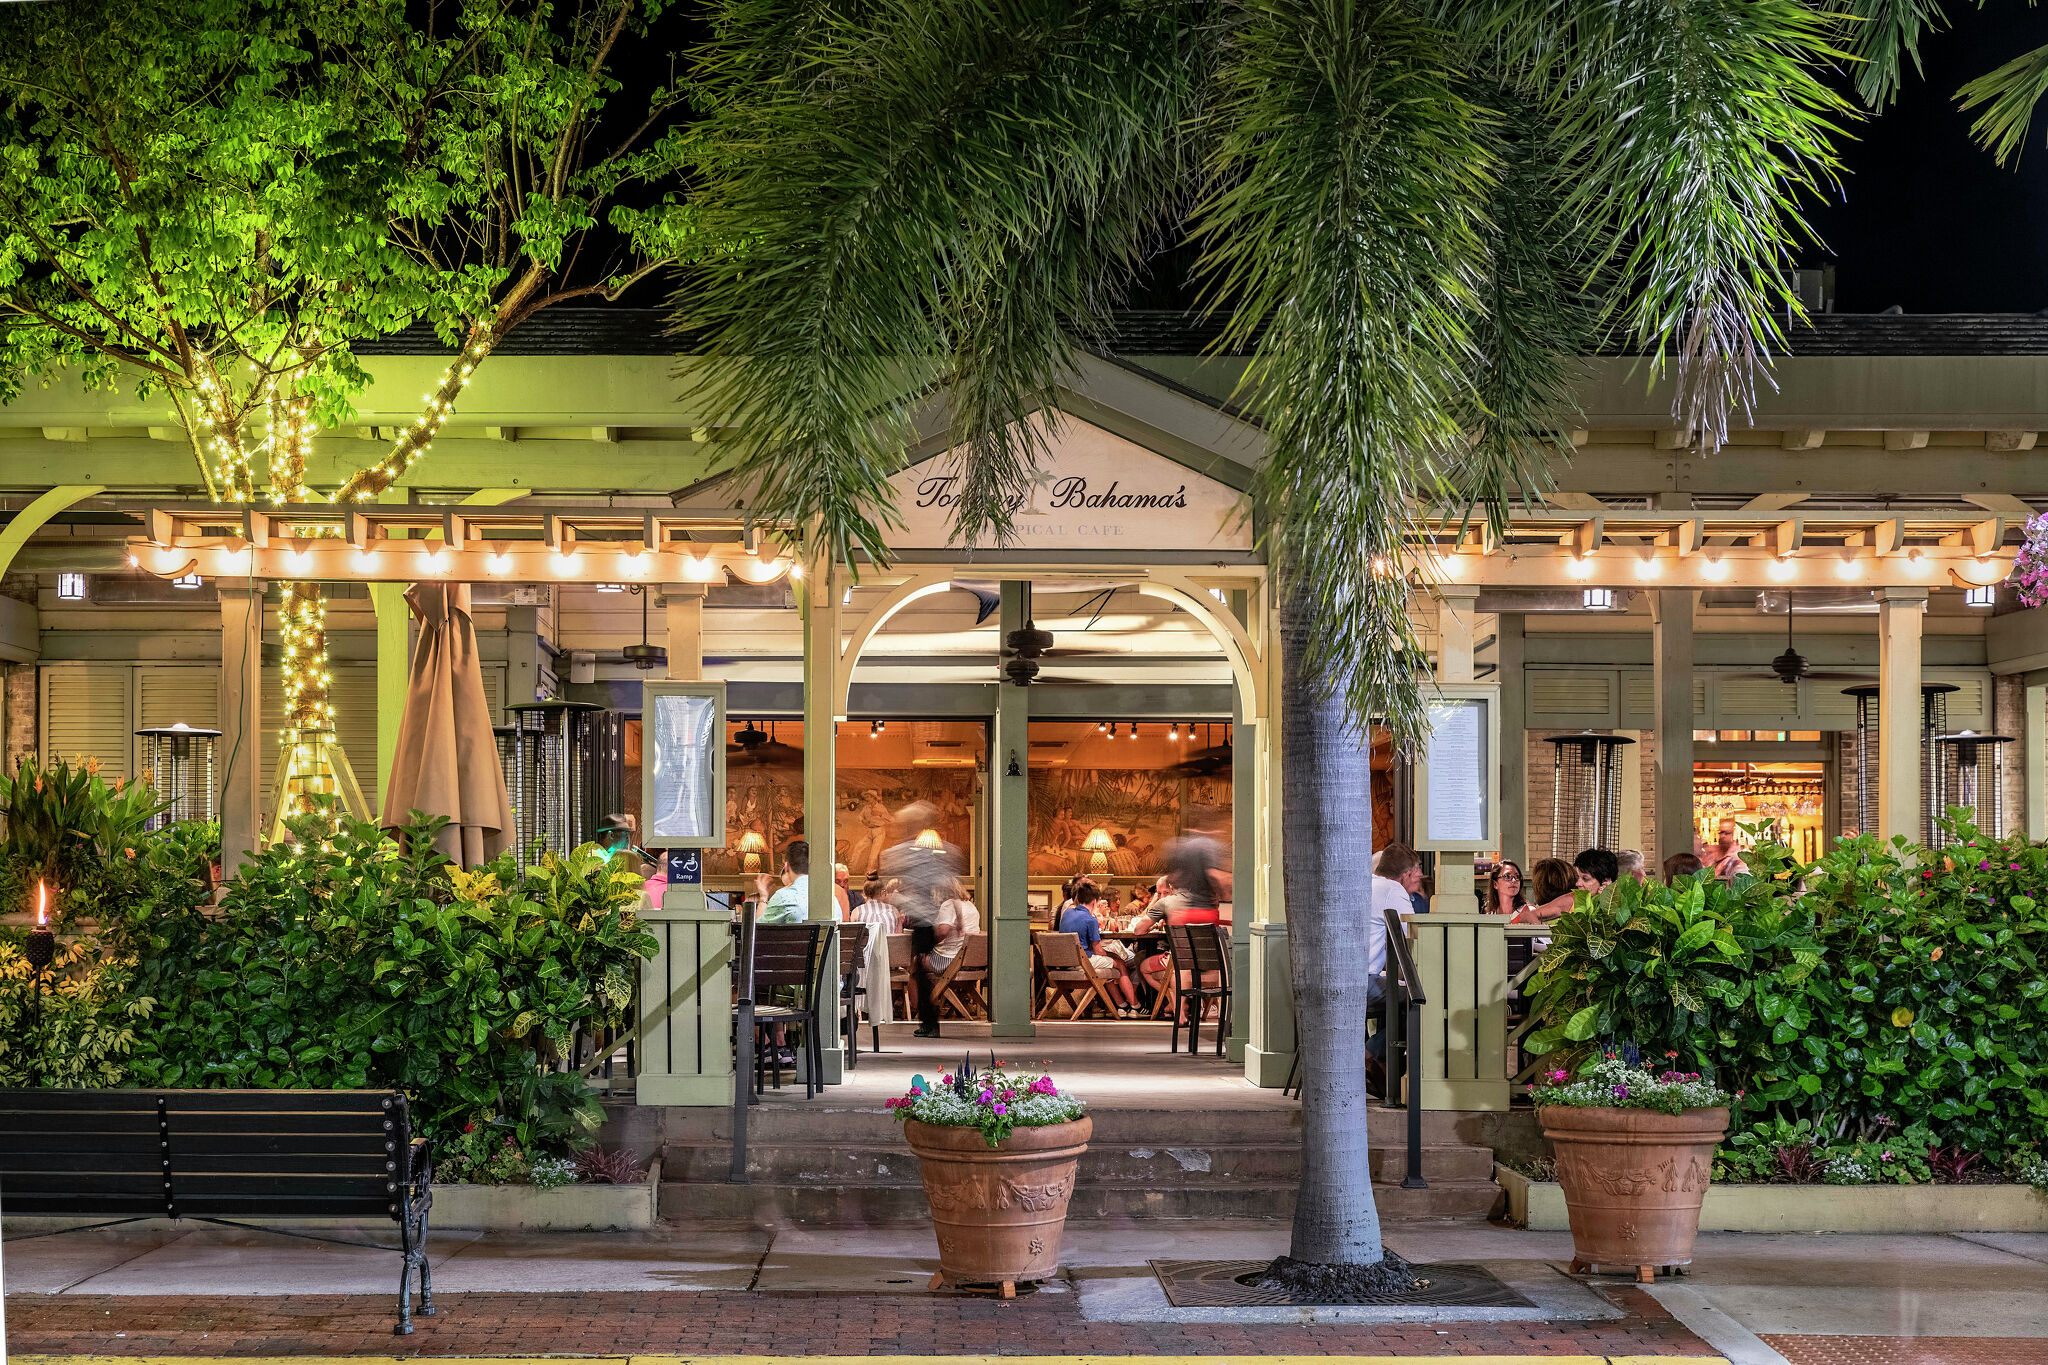 Tommy Bahama Restaurants & Marlin Bars